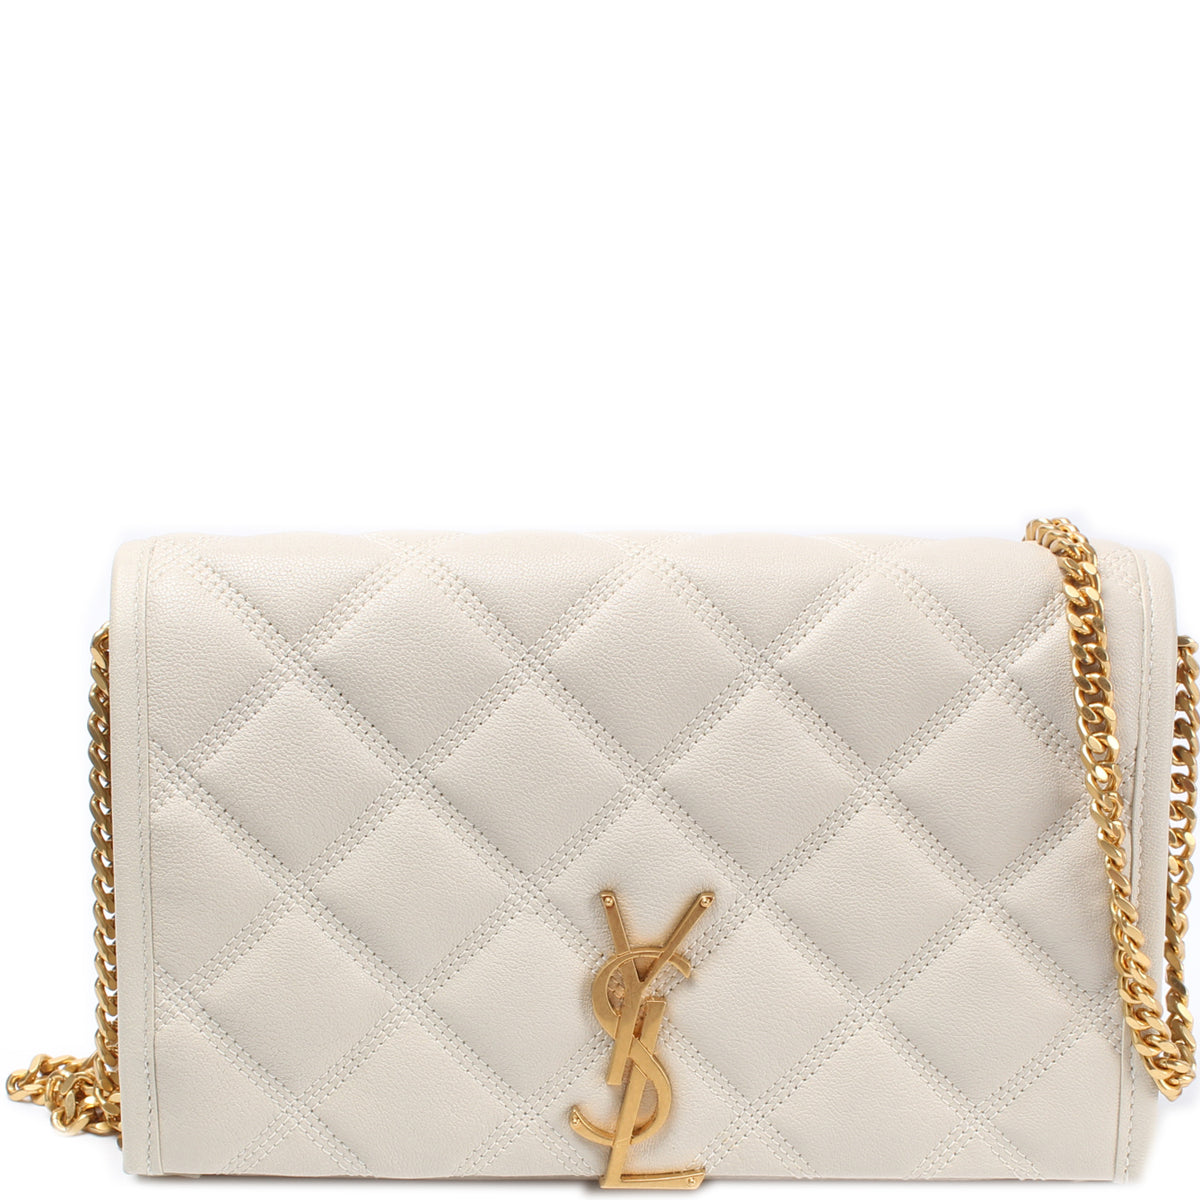 Shop Ysl Wallet Chain Bag